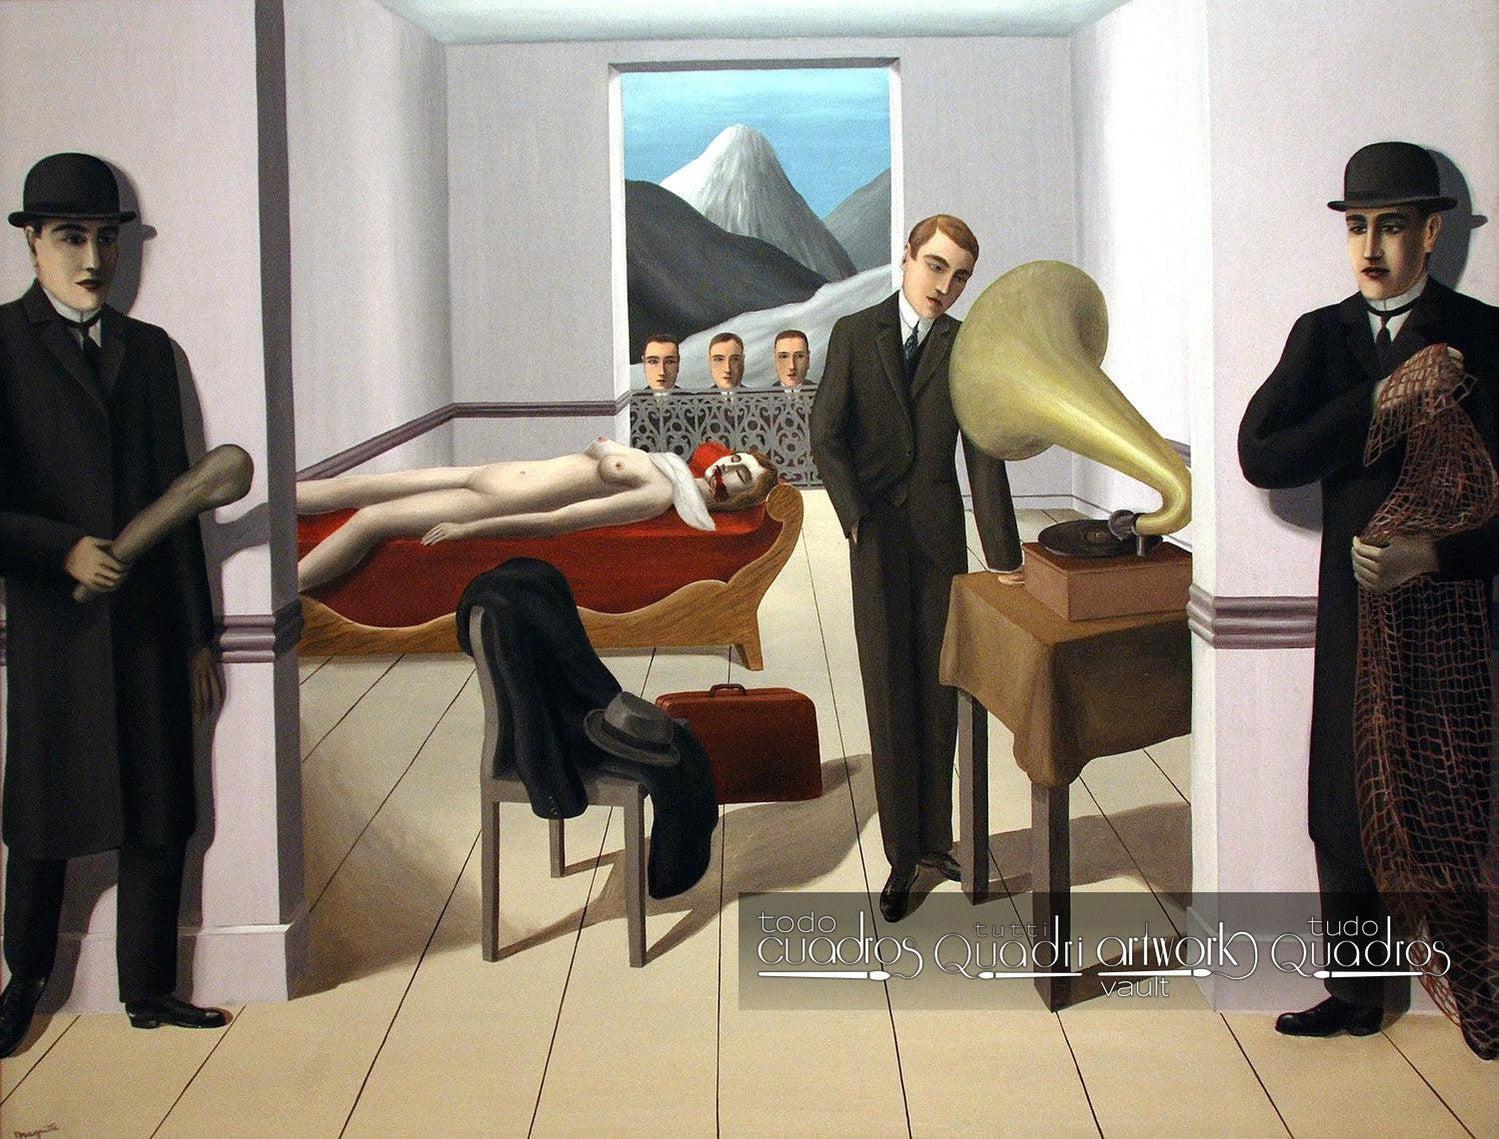 El asesino amenazado, Magritte